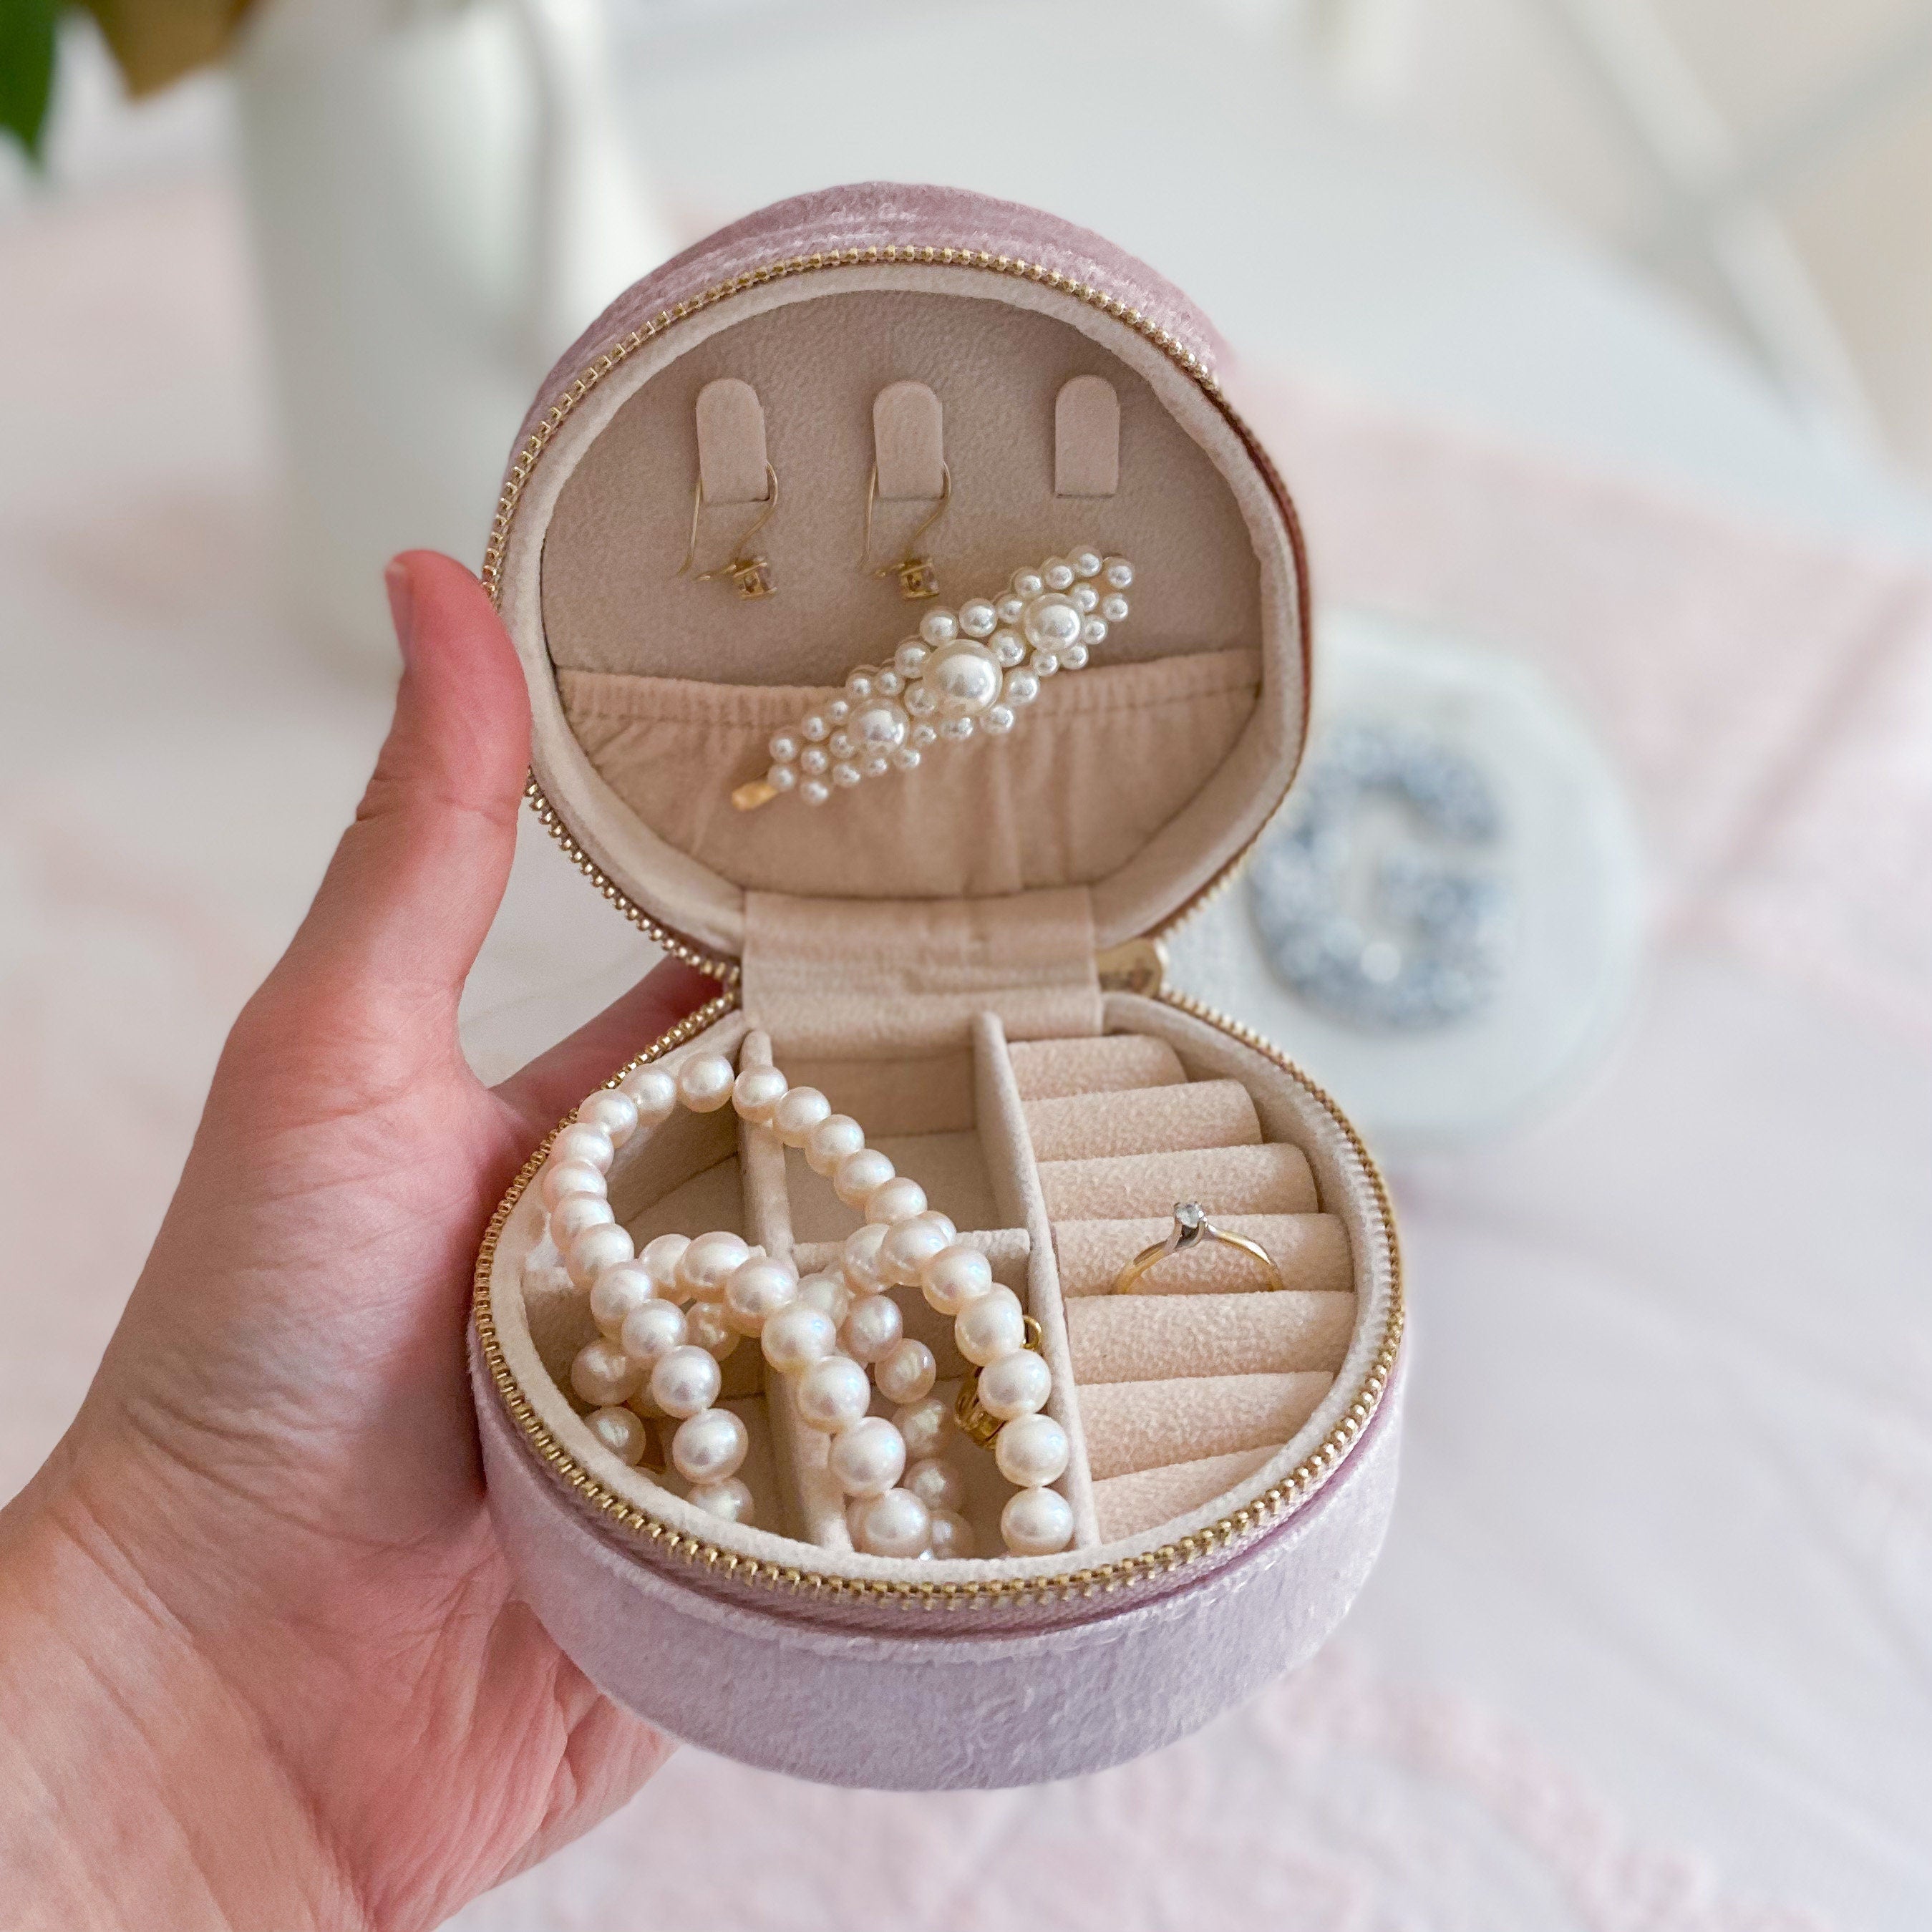 Personalised Velvet Jewellery Box With Initial, Wedding Bride Gift, Bridesmaid Proposal, Jewelry Organiser